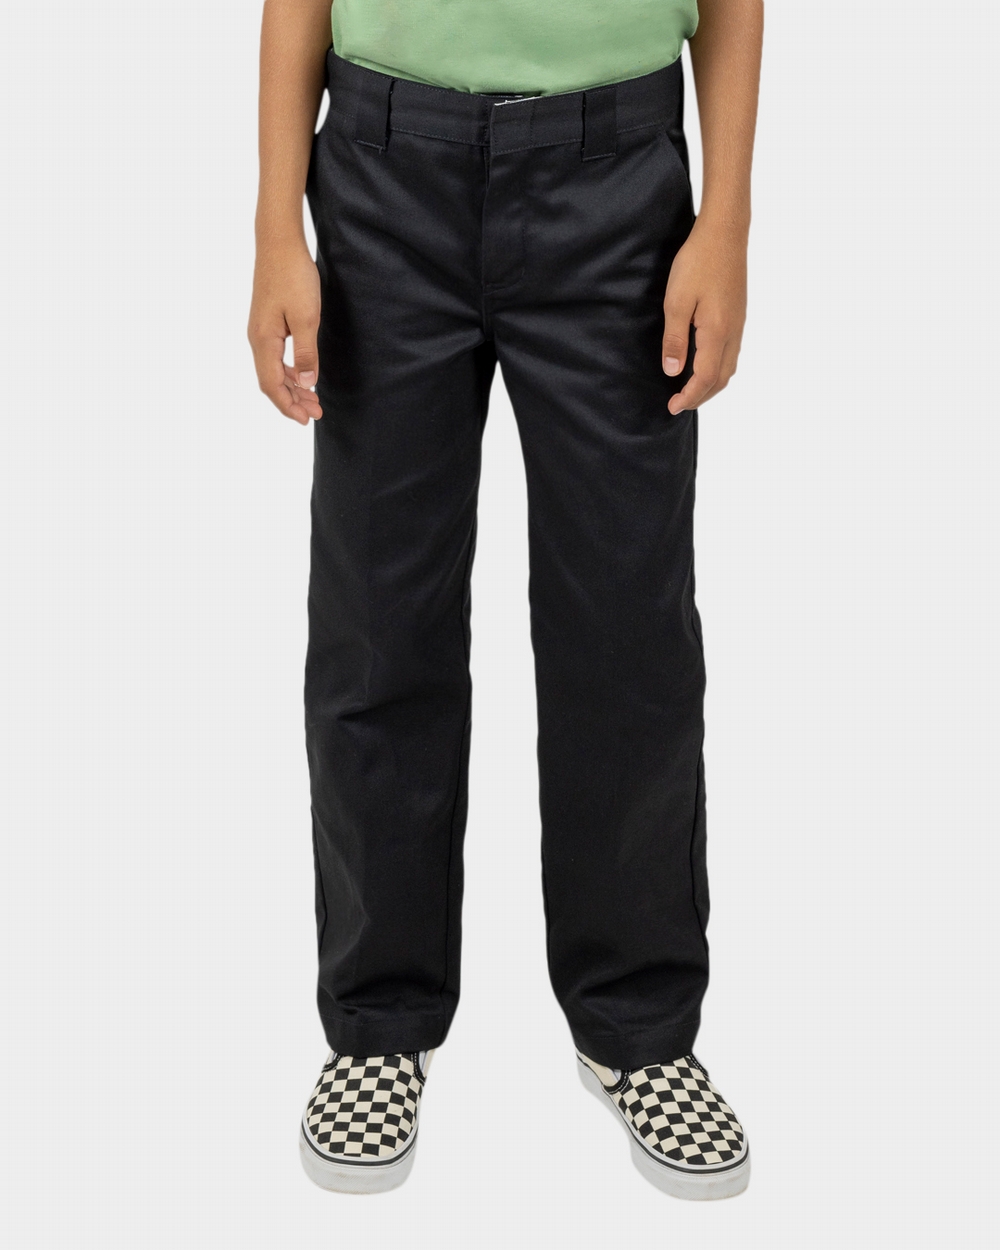 Bigmen.com's Big and Tall Creekwood Denim Pants with Full Elastic  Drawstring, Fly Zipper, and Pockets to Size Big 72